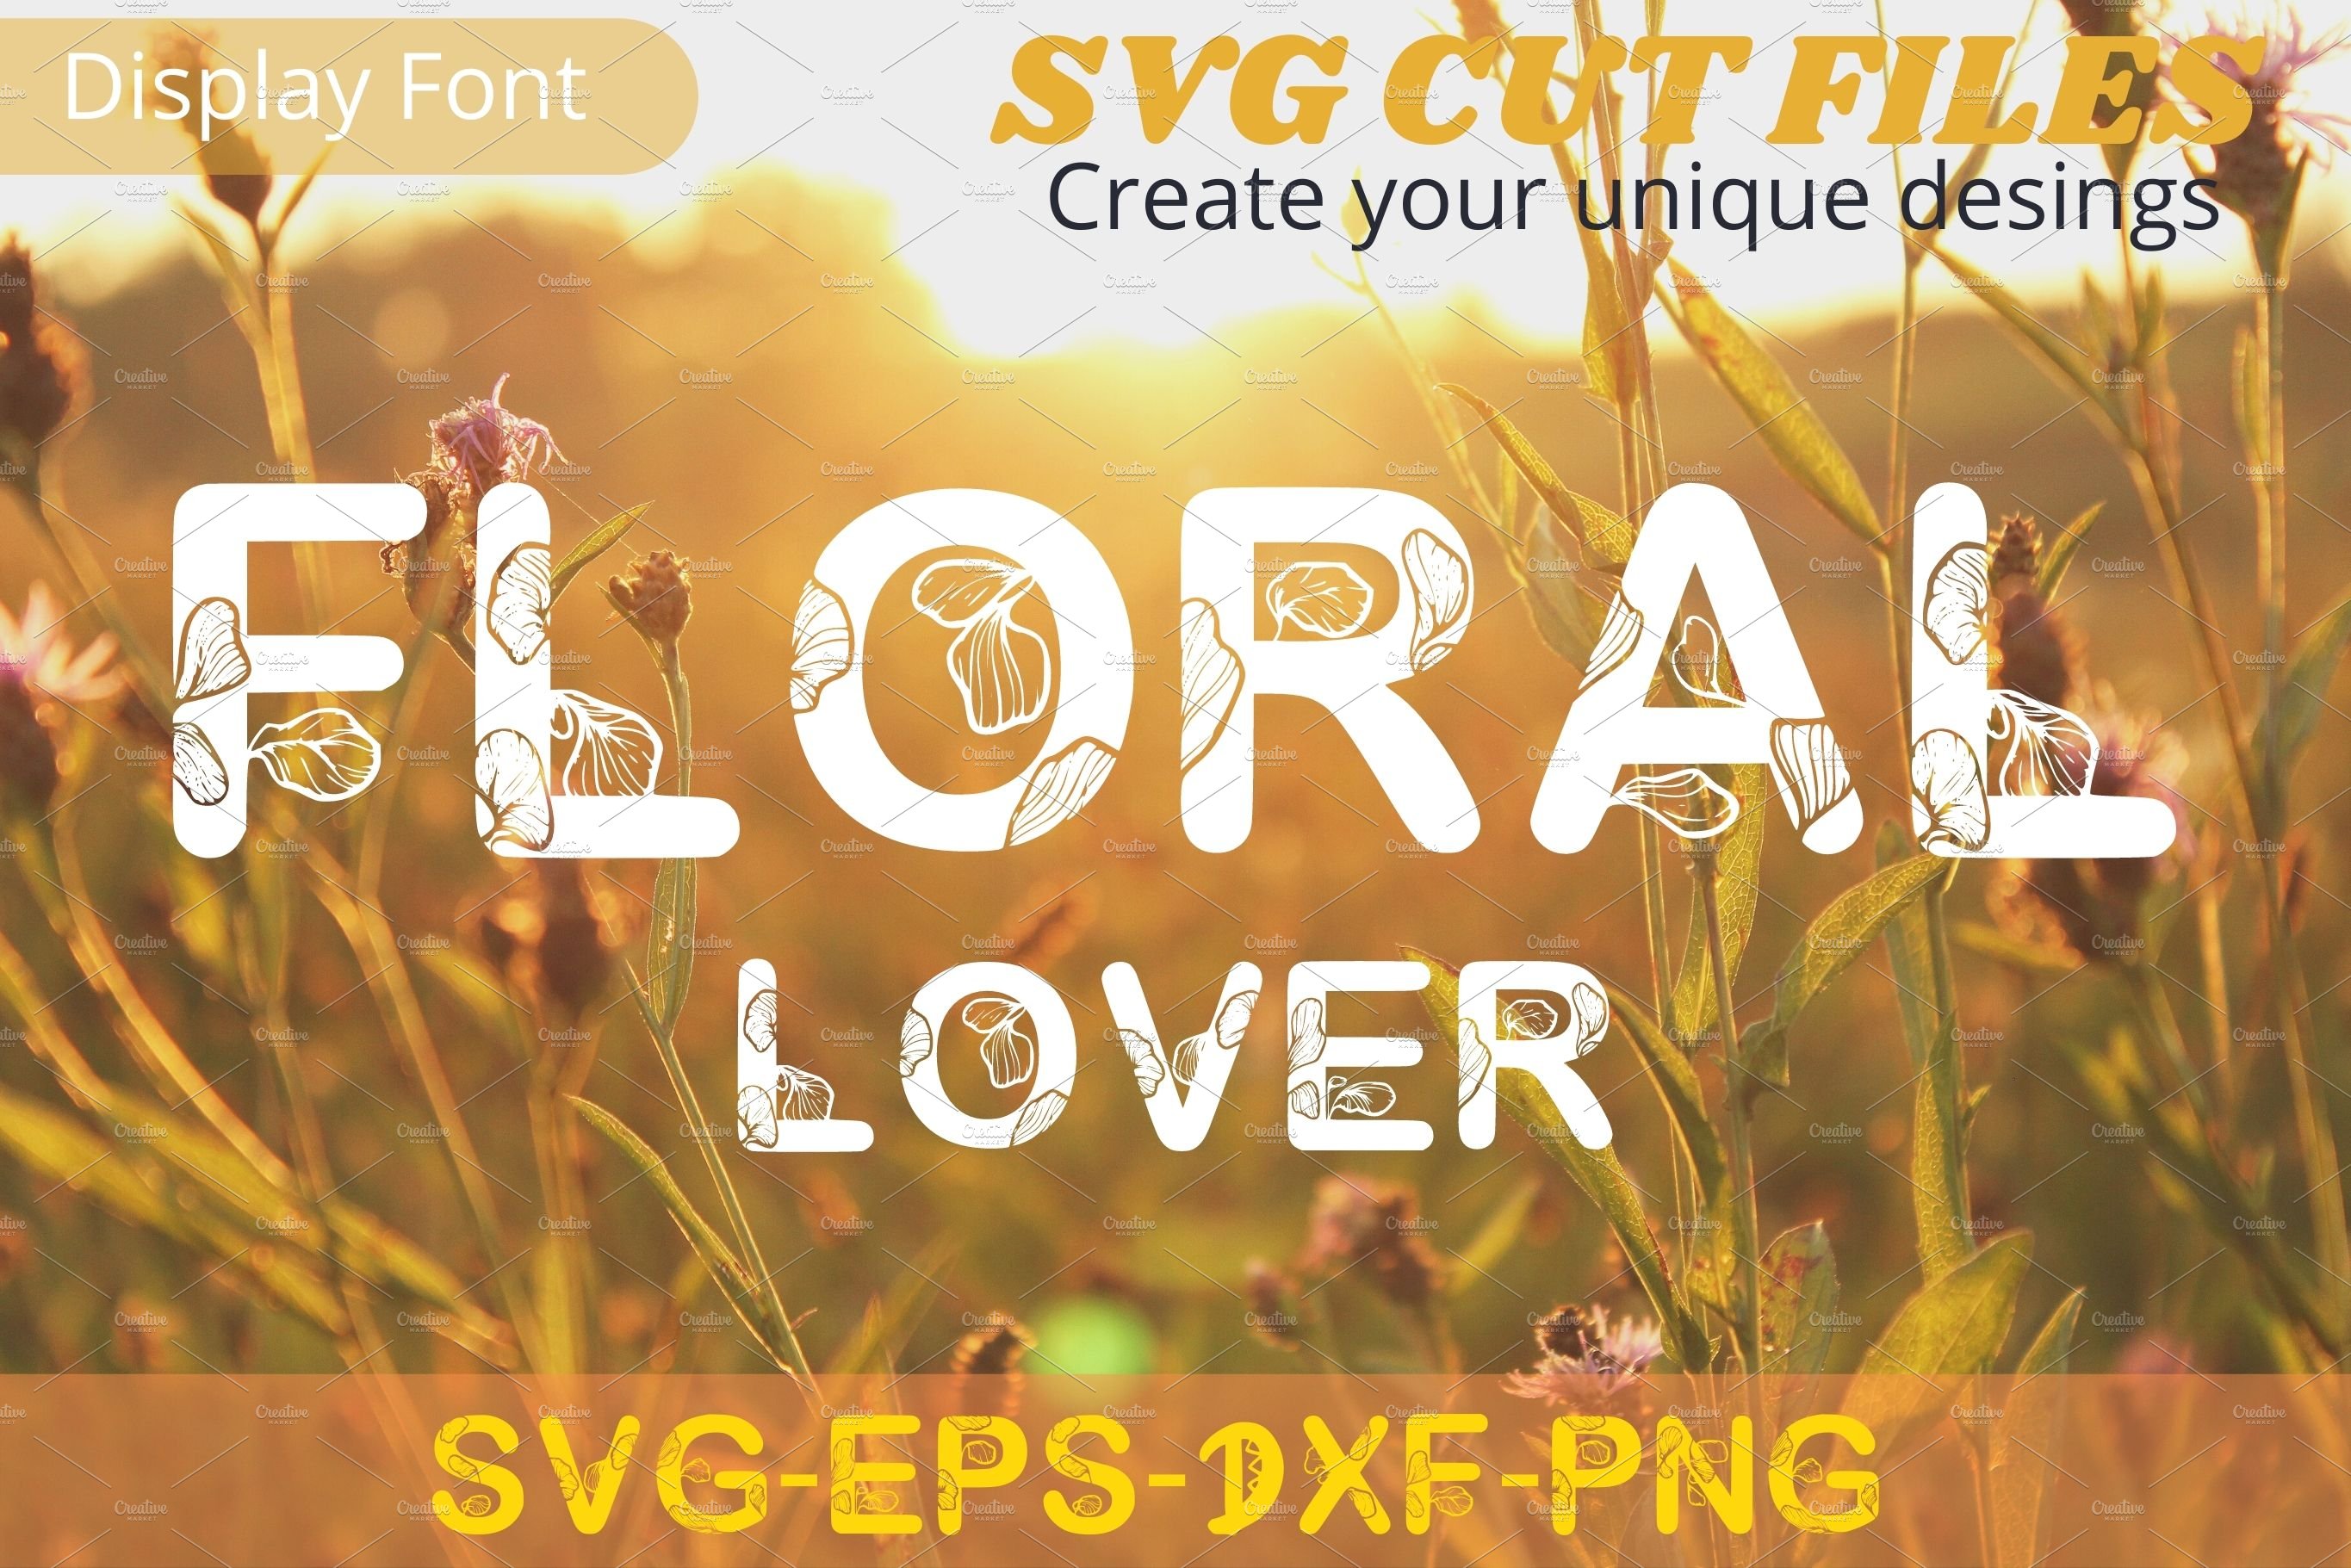 Floral Lover font, SVG cut flies cover image.